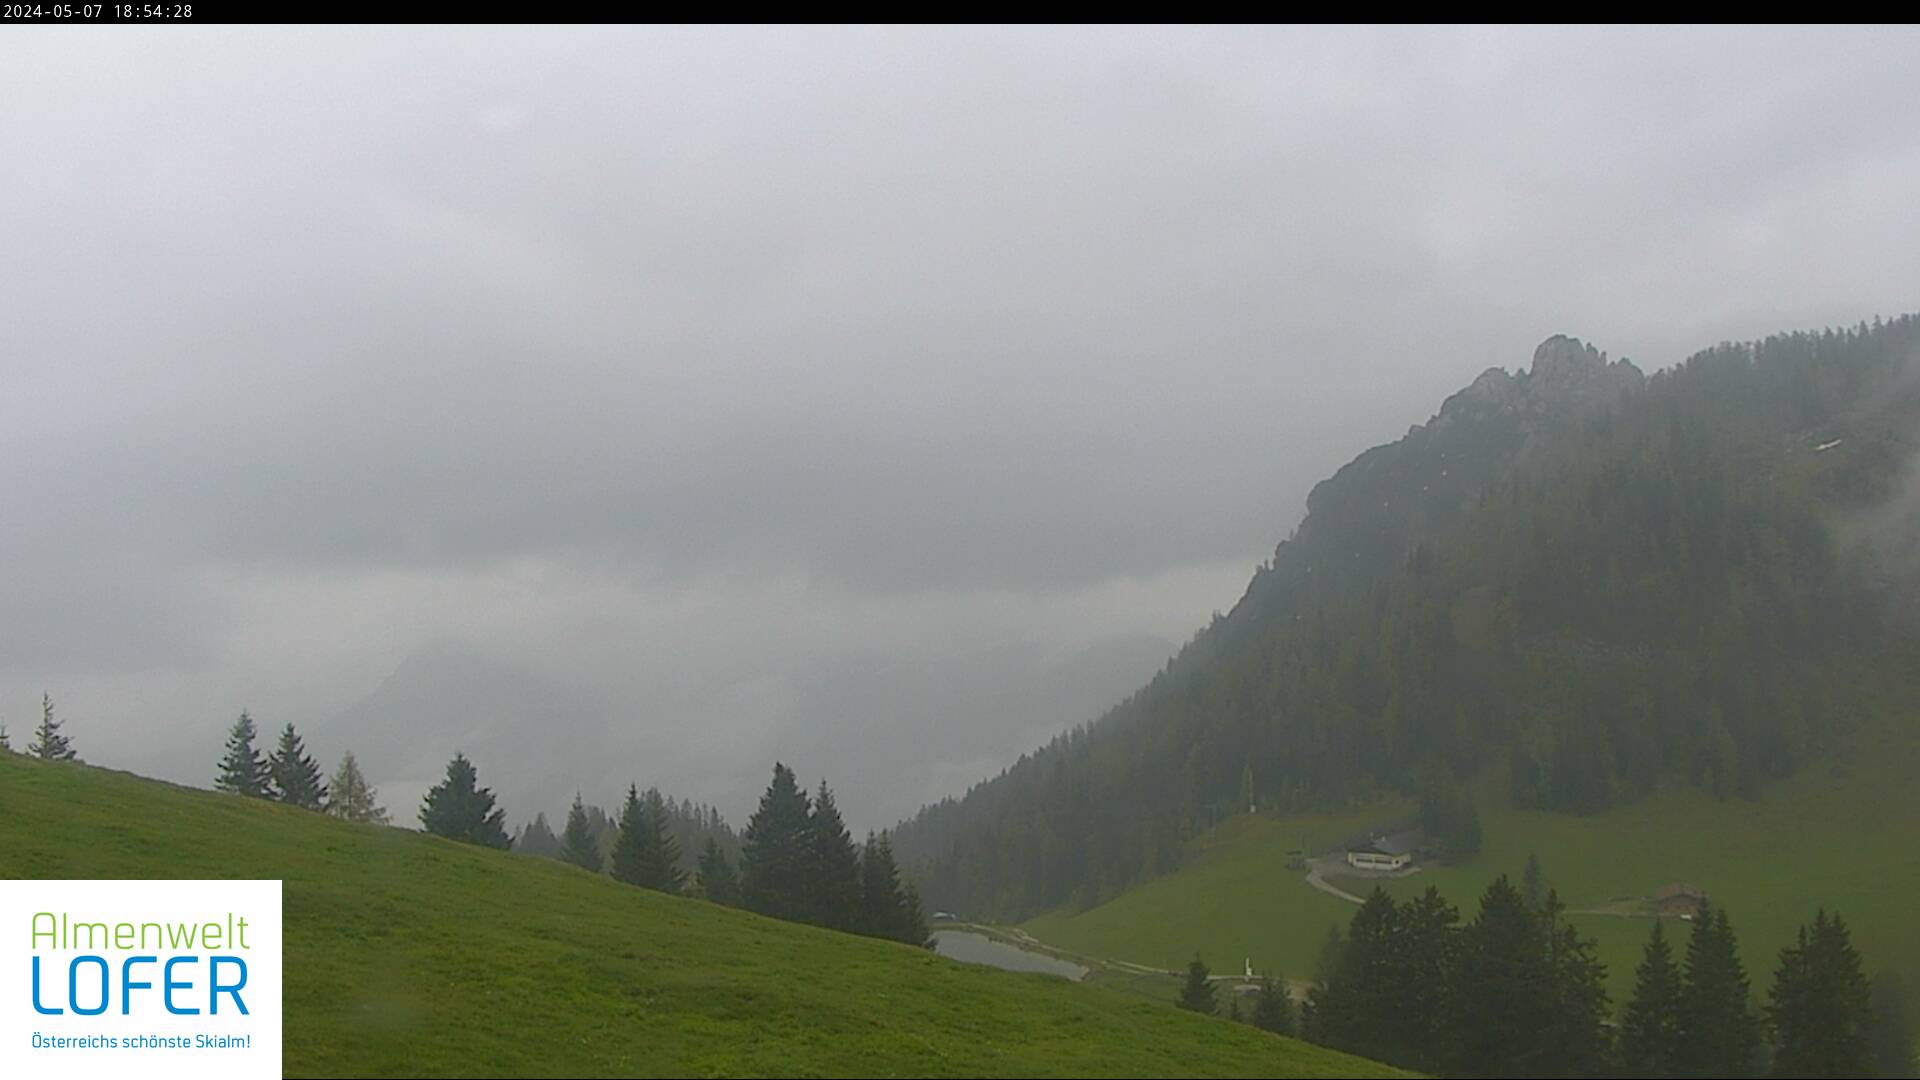 WEBkamera Lofer - Almenwelt, pohled na Berchtesgadendké Alpy